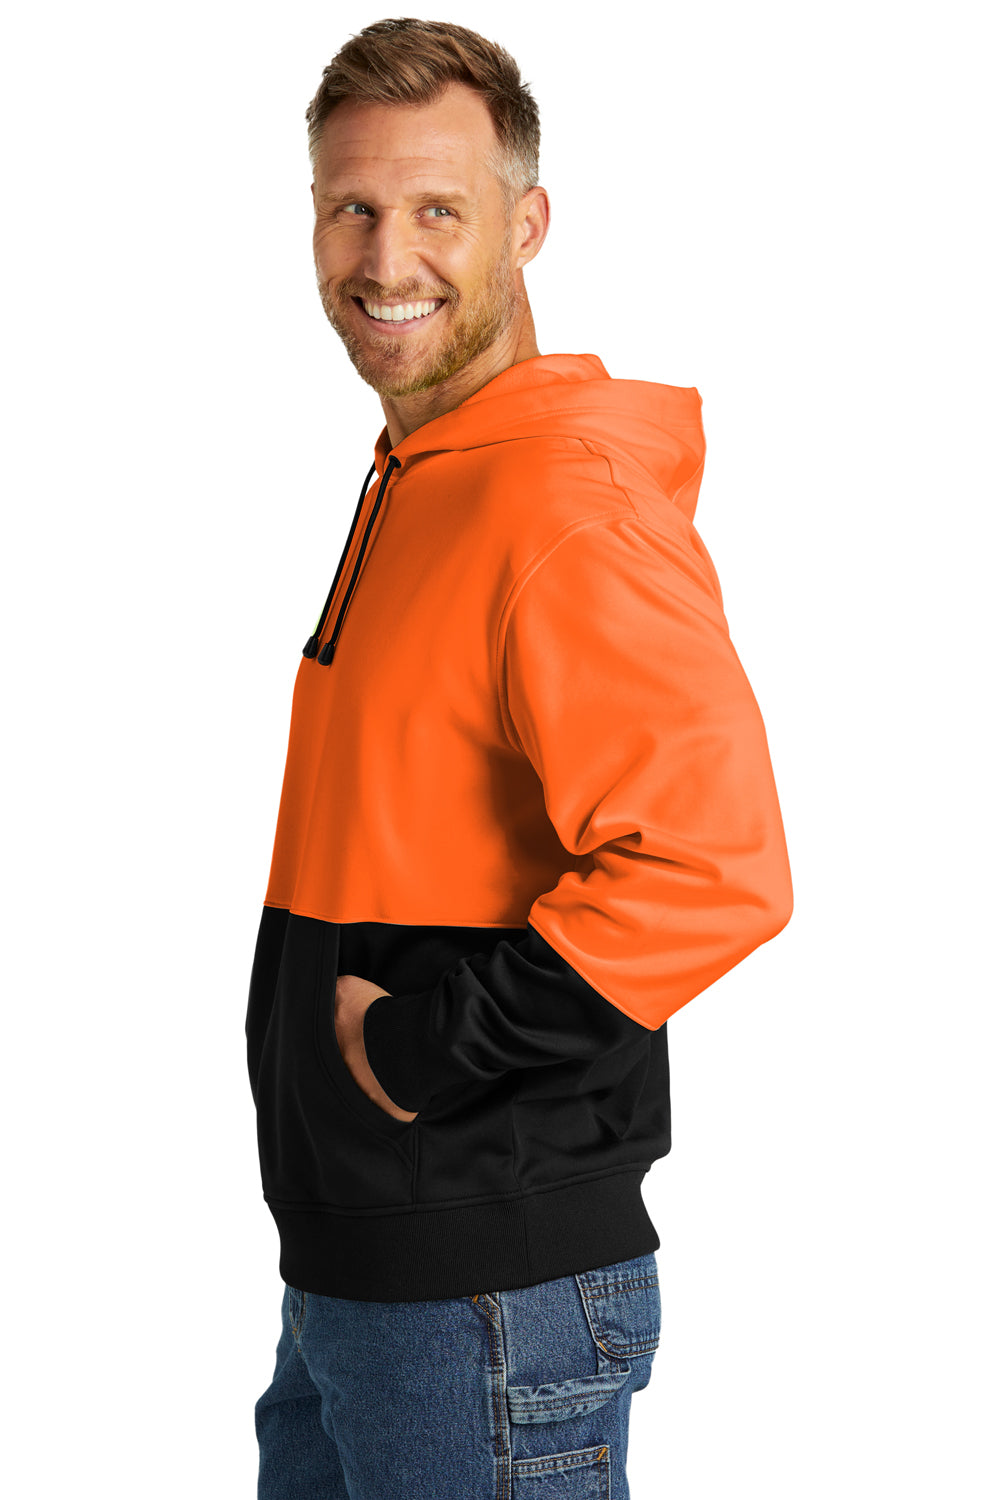 CornerStone CSF01 Enhanced Visibility Fleece Hooded Sweatshirt Hoodie Safety Orange Side